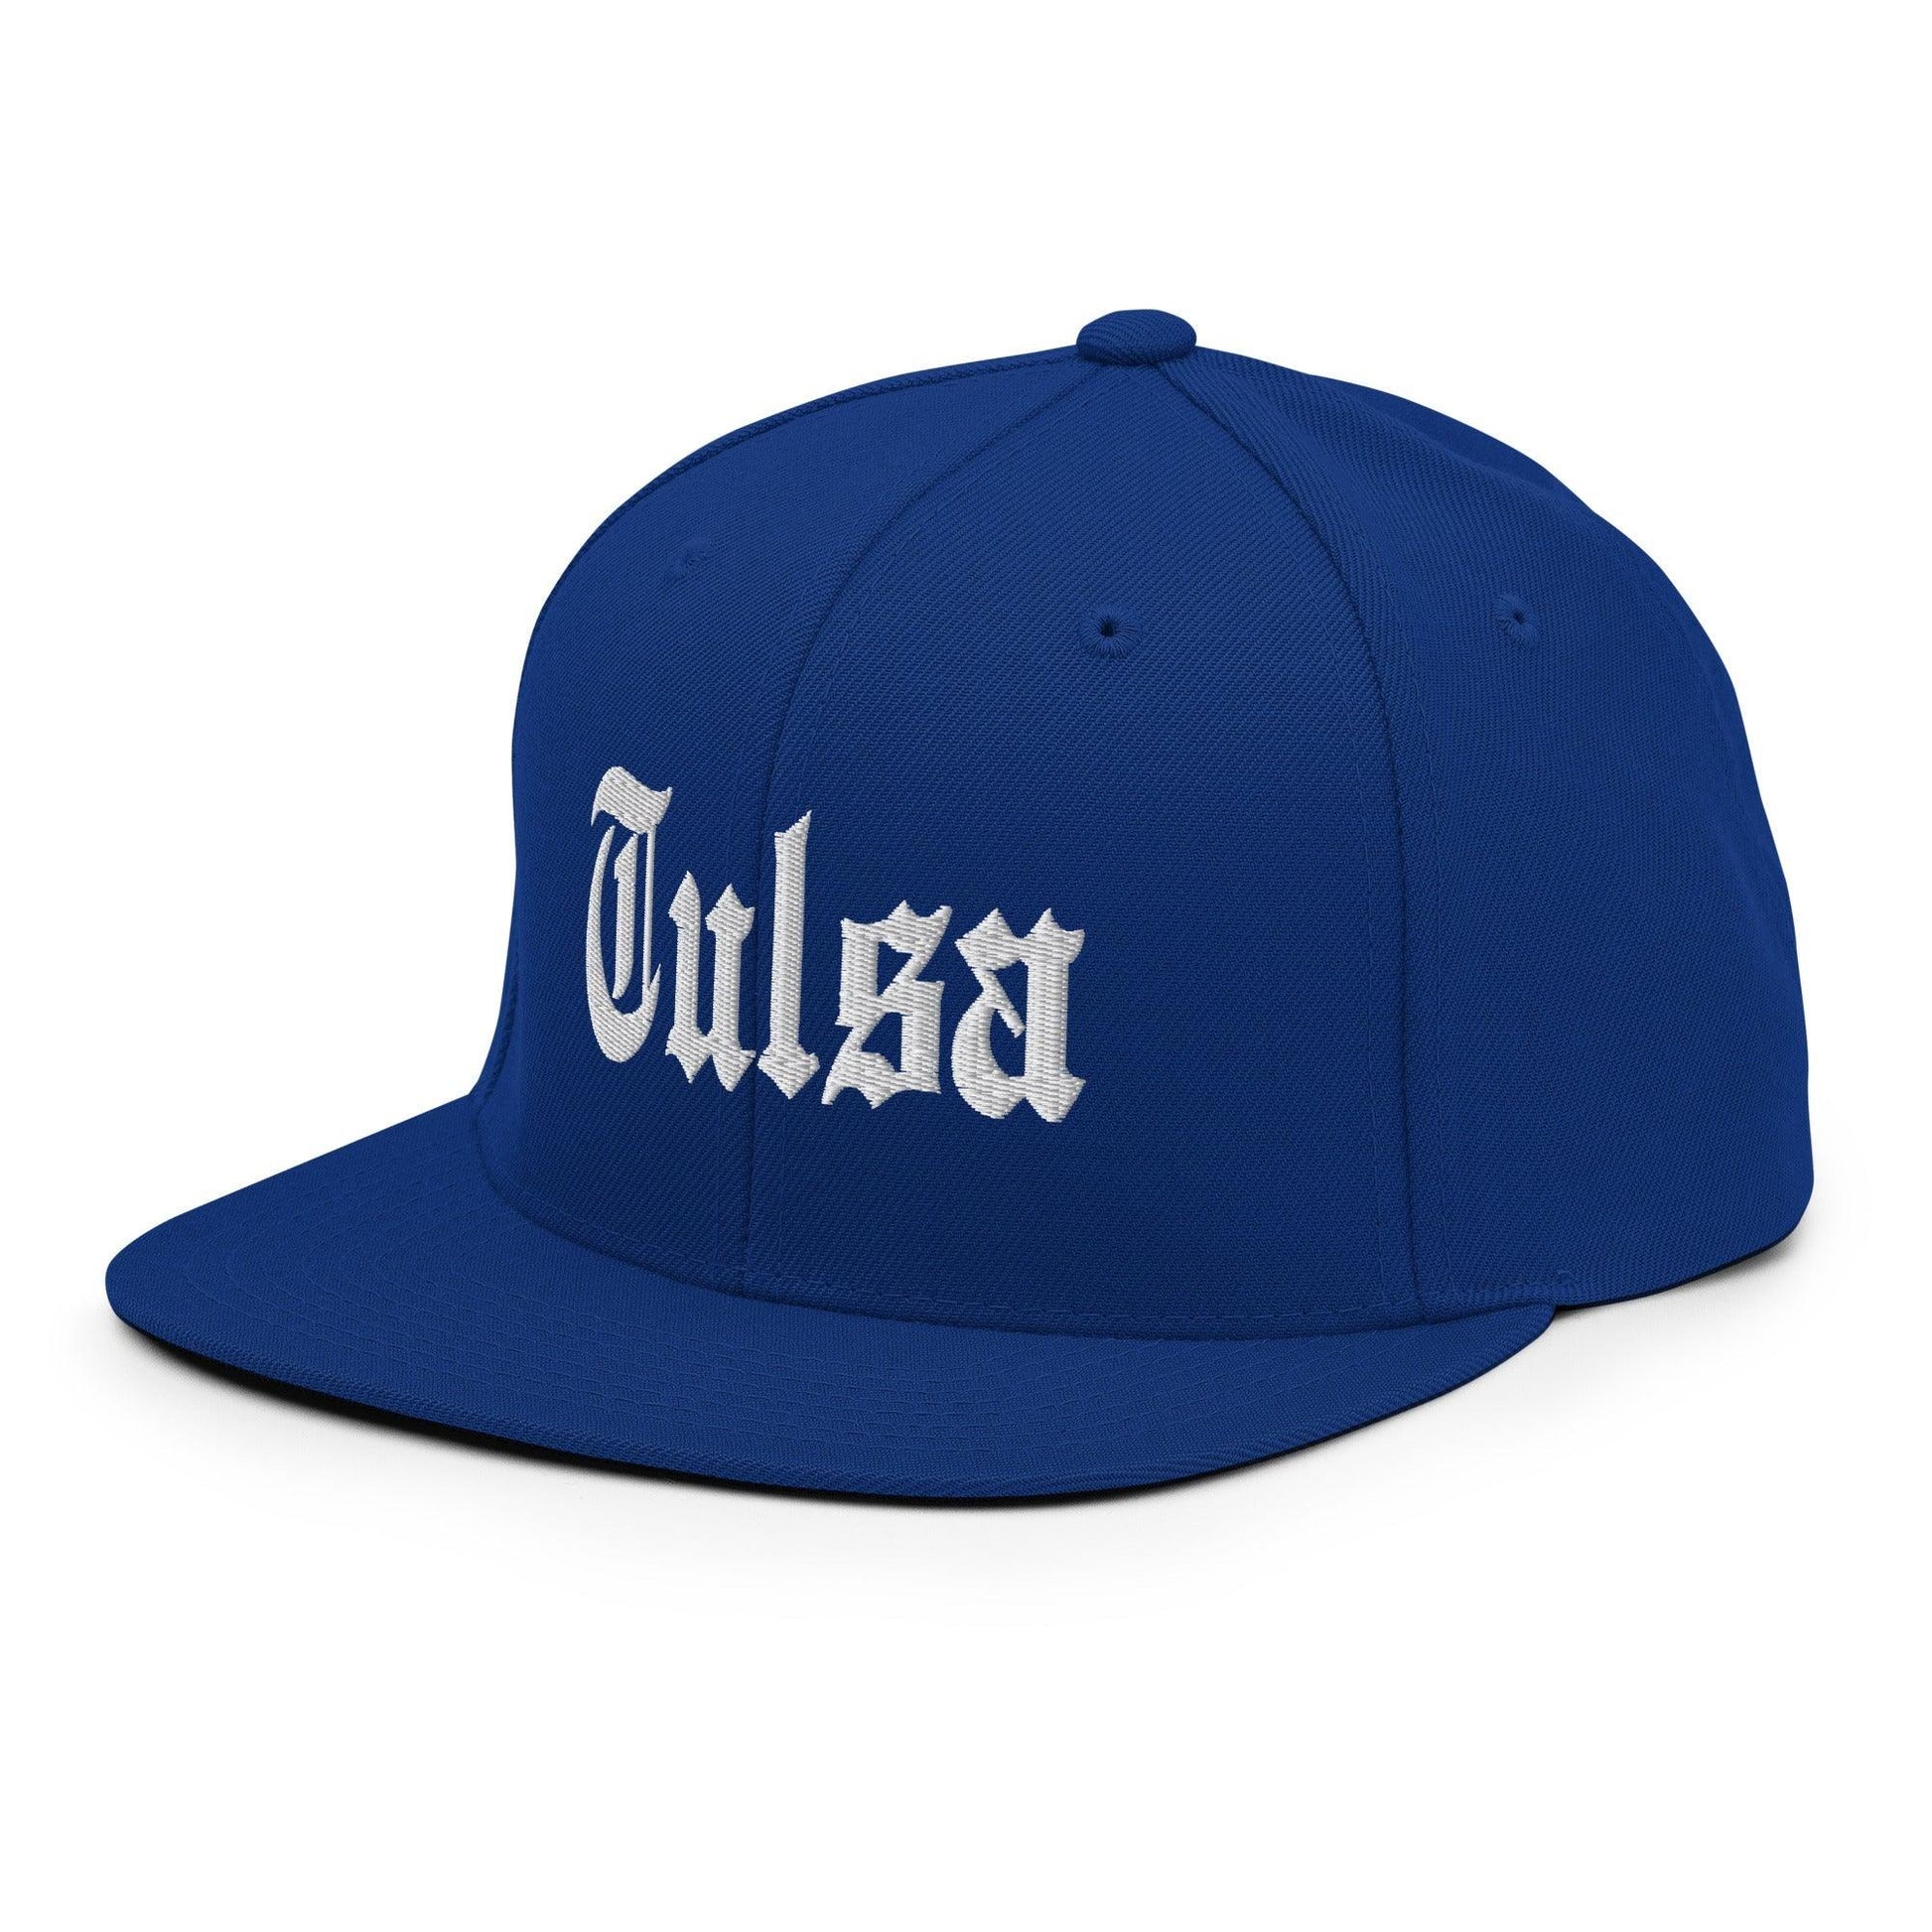 Tulsa OG Old English Snapback Hat Royal Blue